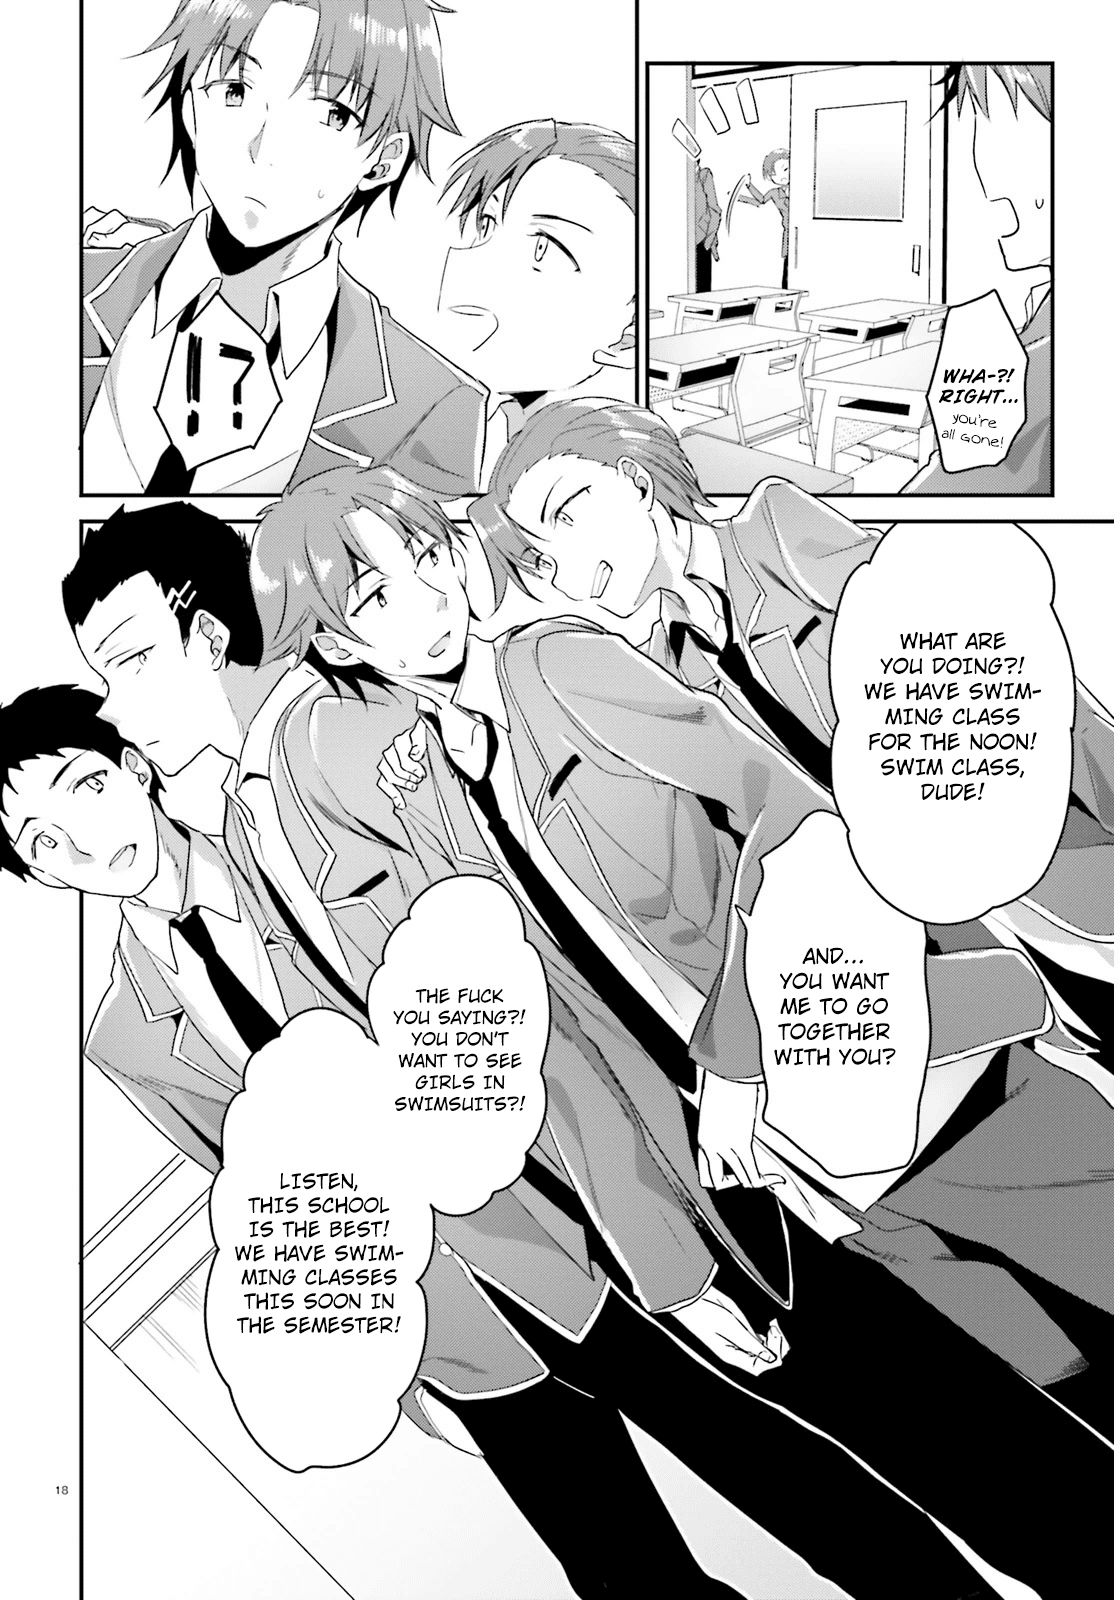 Classroom of the Elite, Chapter 3 - Classroom of the Elite Manga